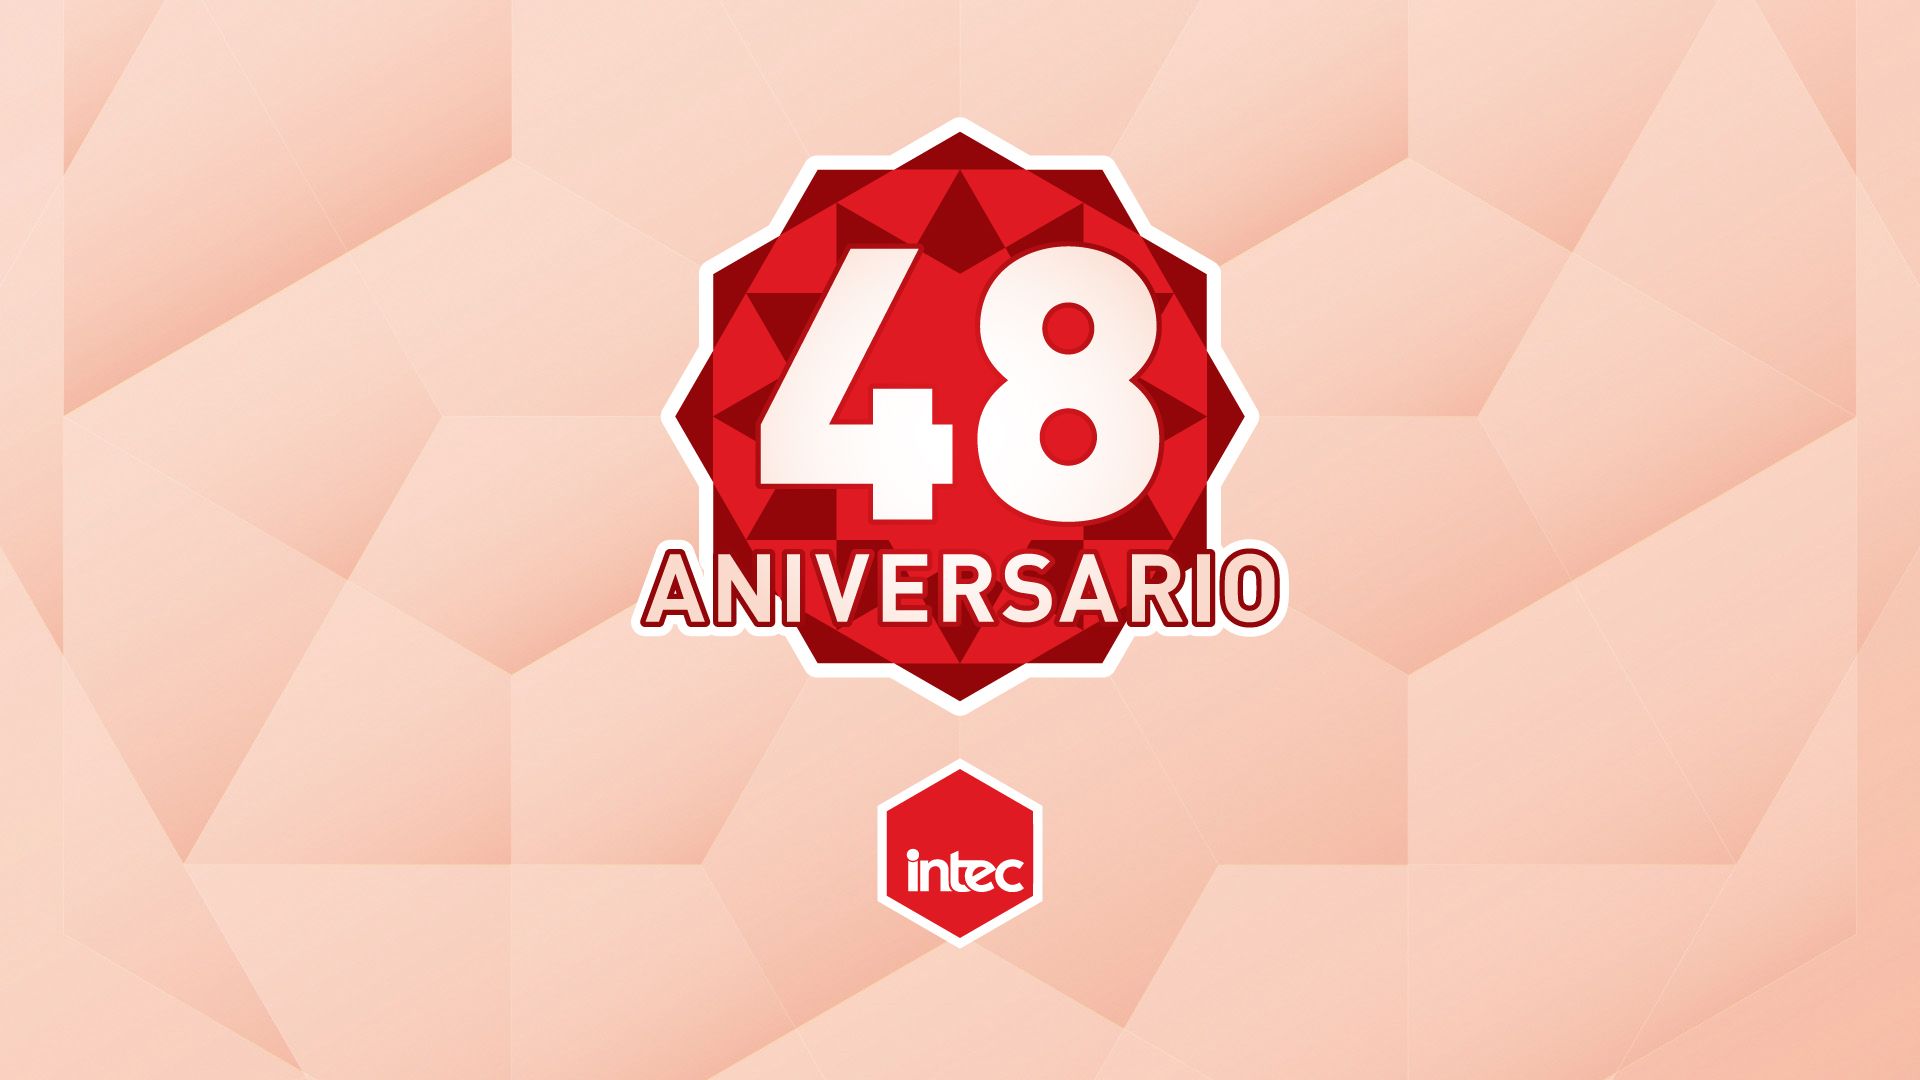 Anniversary%2048-287eac5b Instituto Tecnológico de Santo Domingo - INTEC celebrates its 48th anniversary with an emotional virtual act